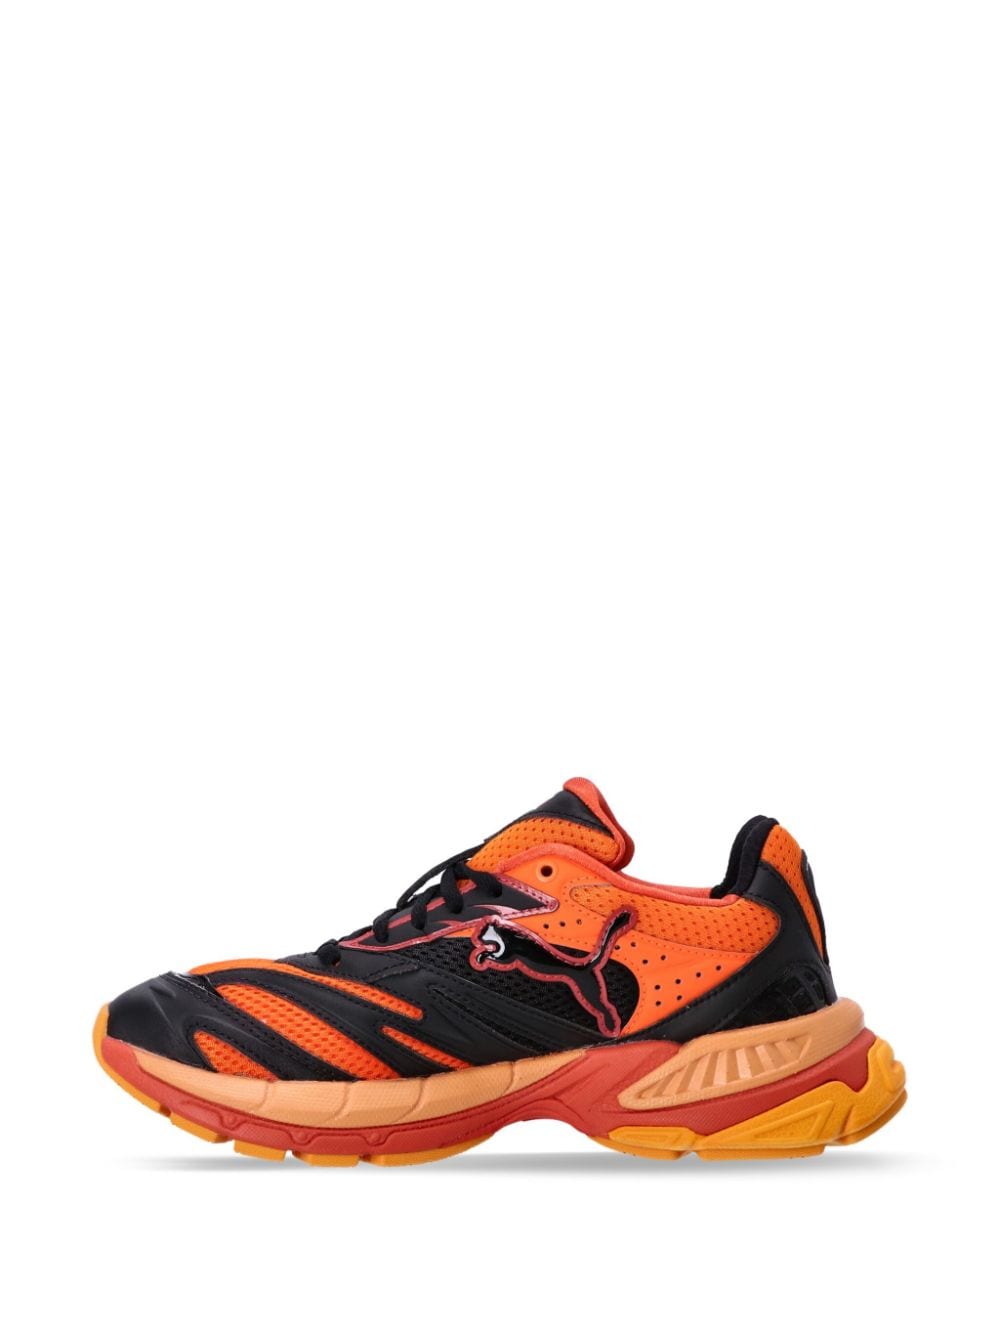 PUMA x PLEASURES Velophasis Layers sneakers Orange